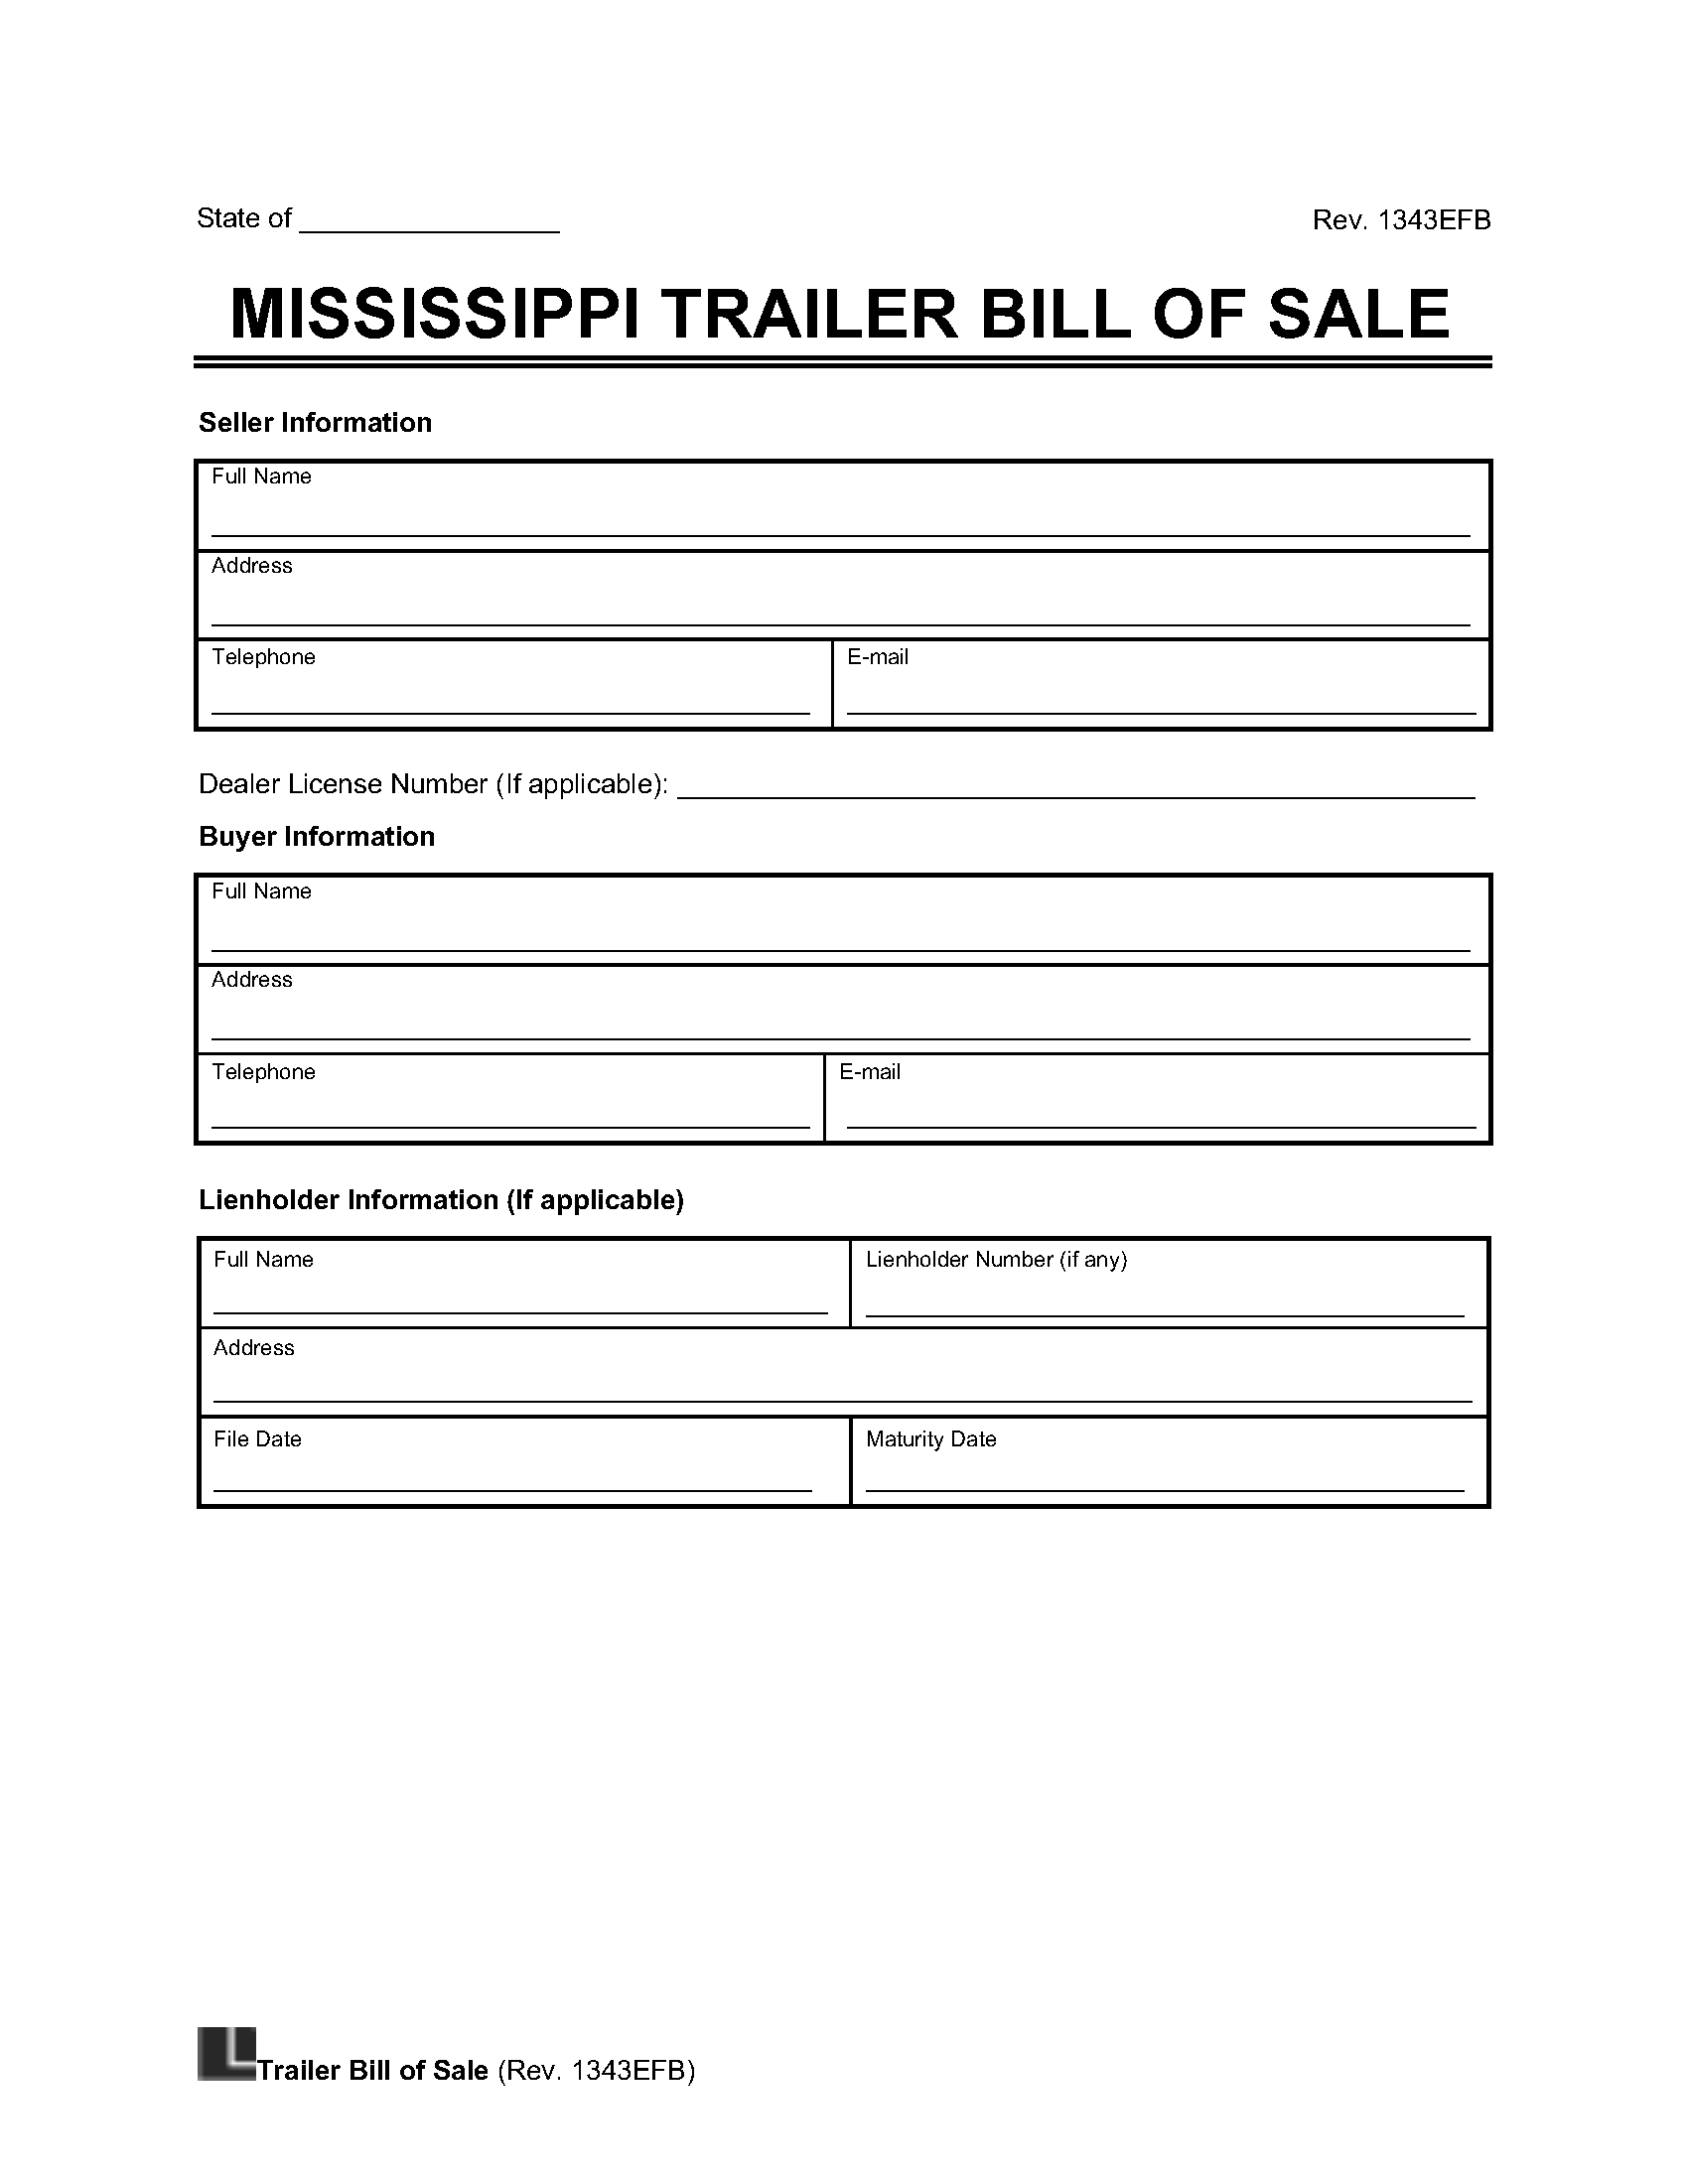 Mississippi Trailer Bill of Sale screenshot